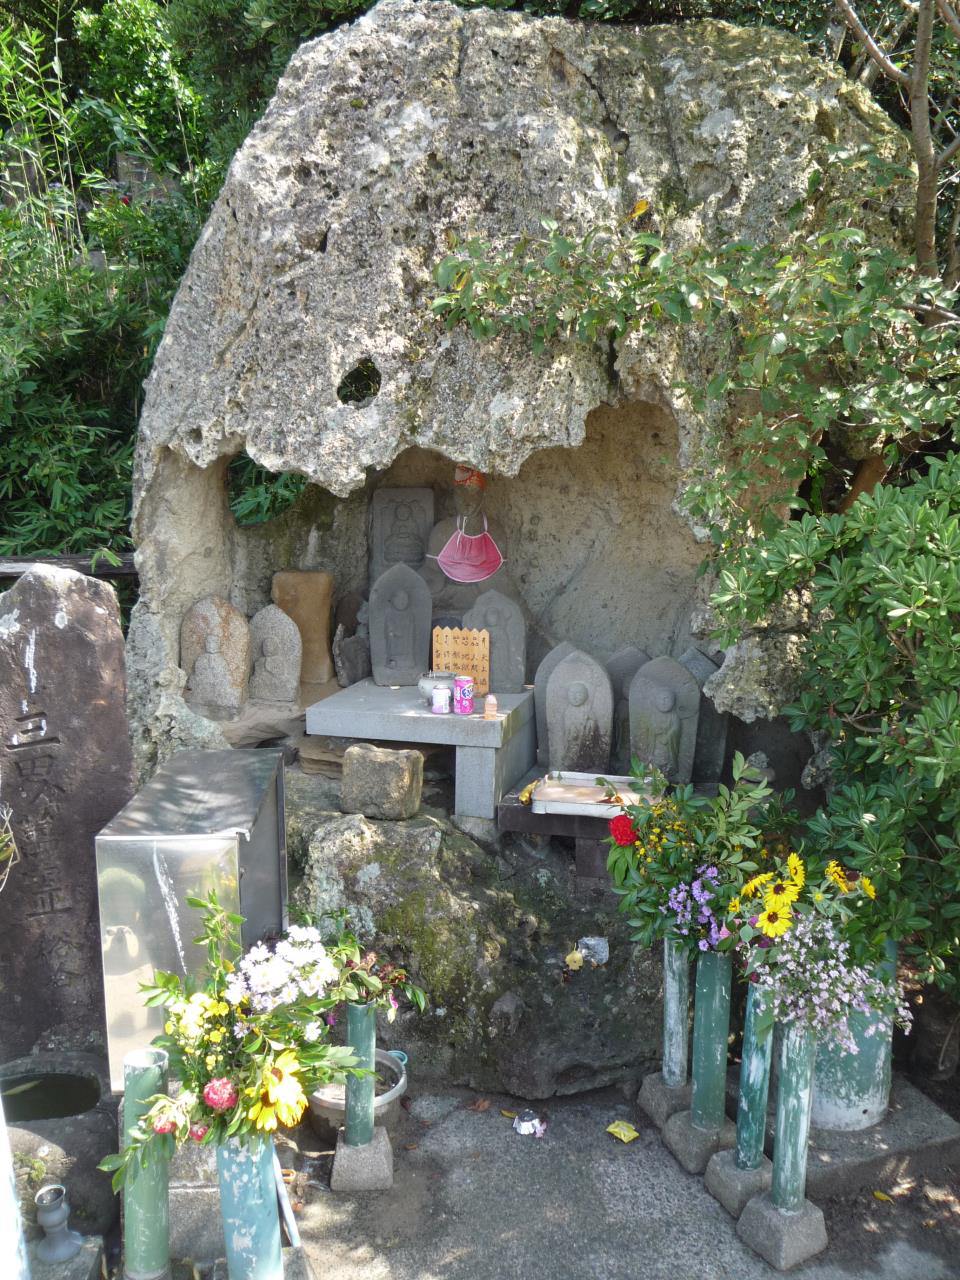 Iwaya Jizo Statues